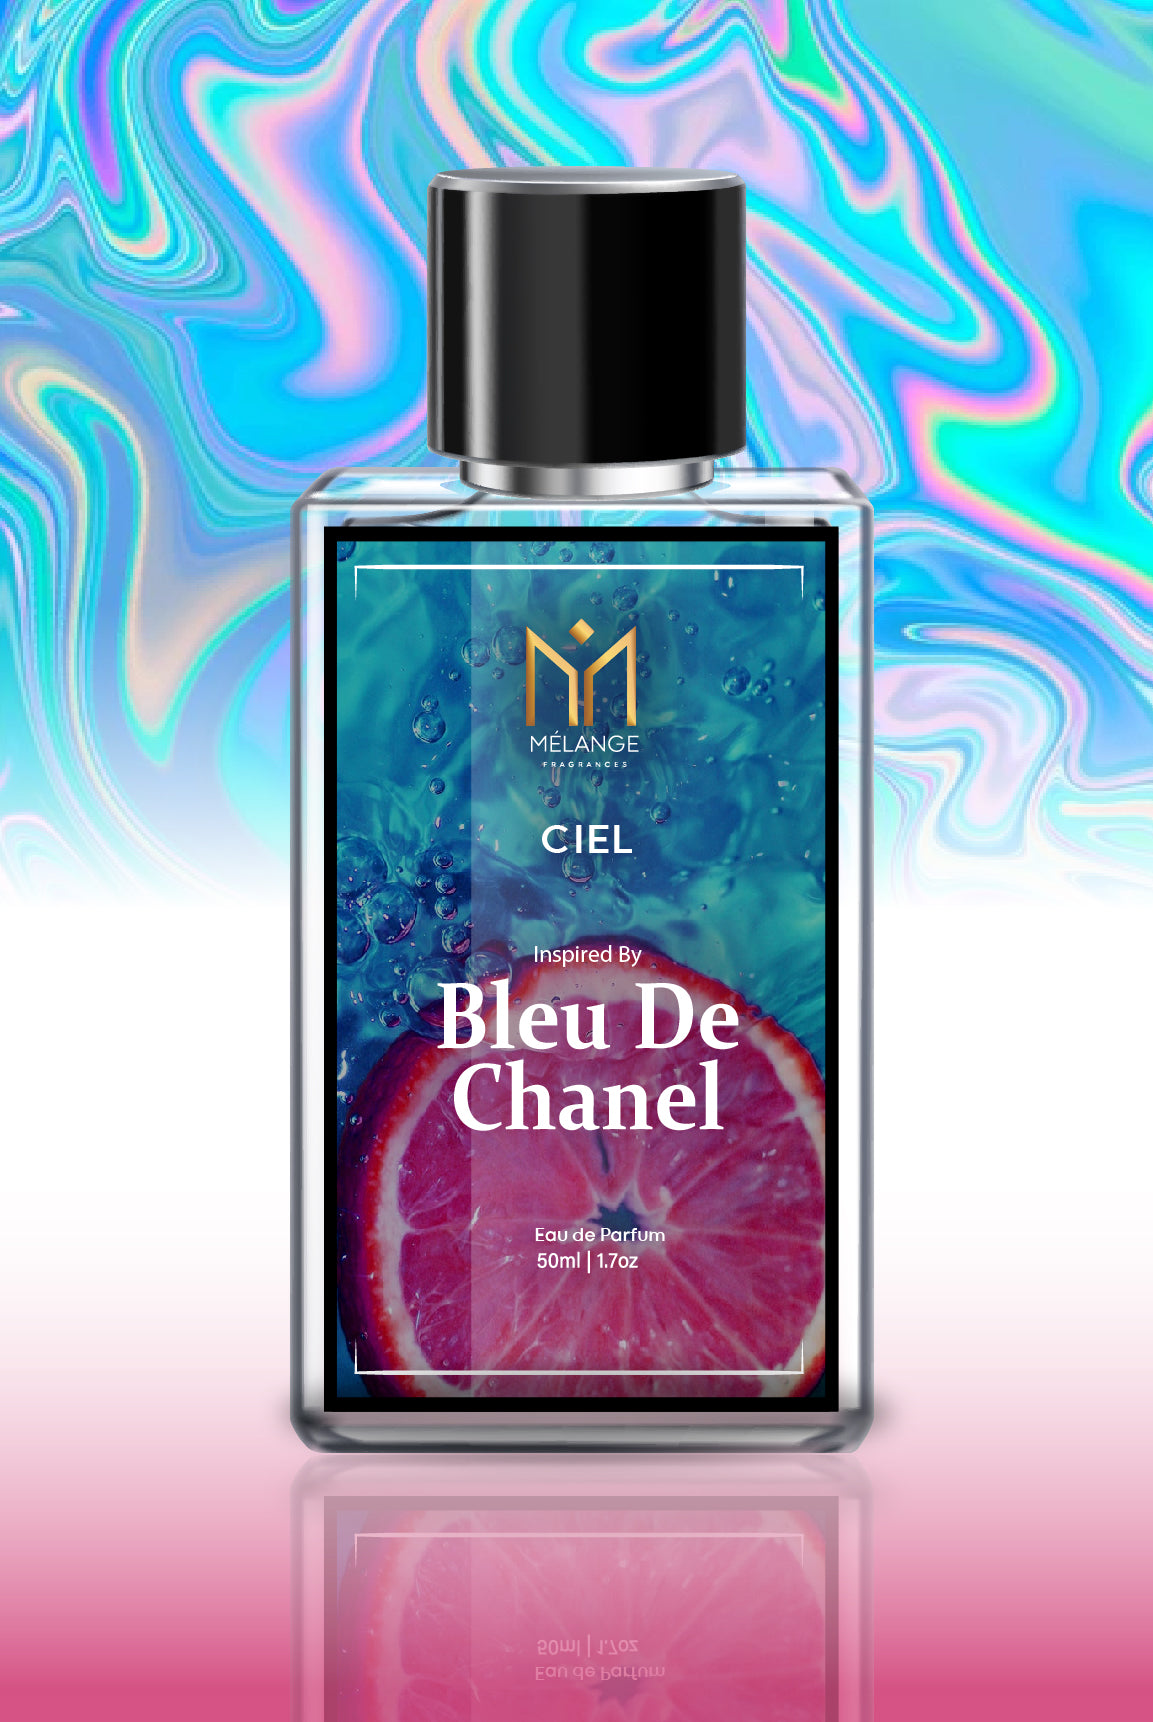 CIEL- Inspired By Bleu De Chanel